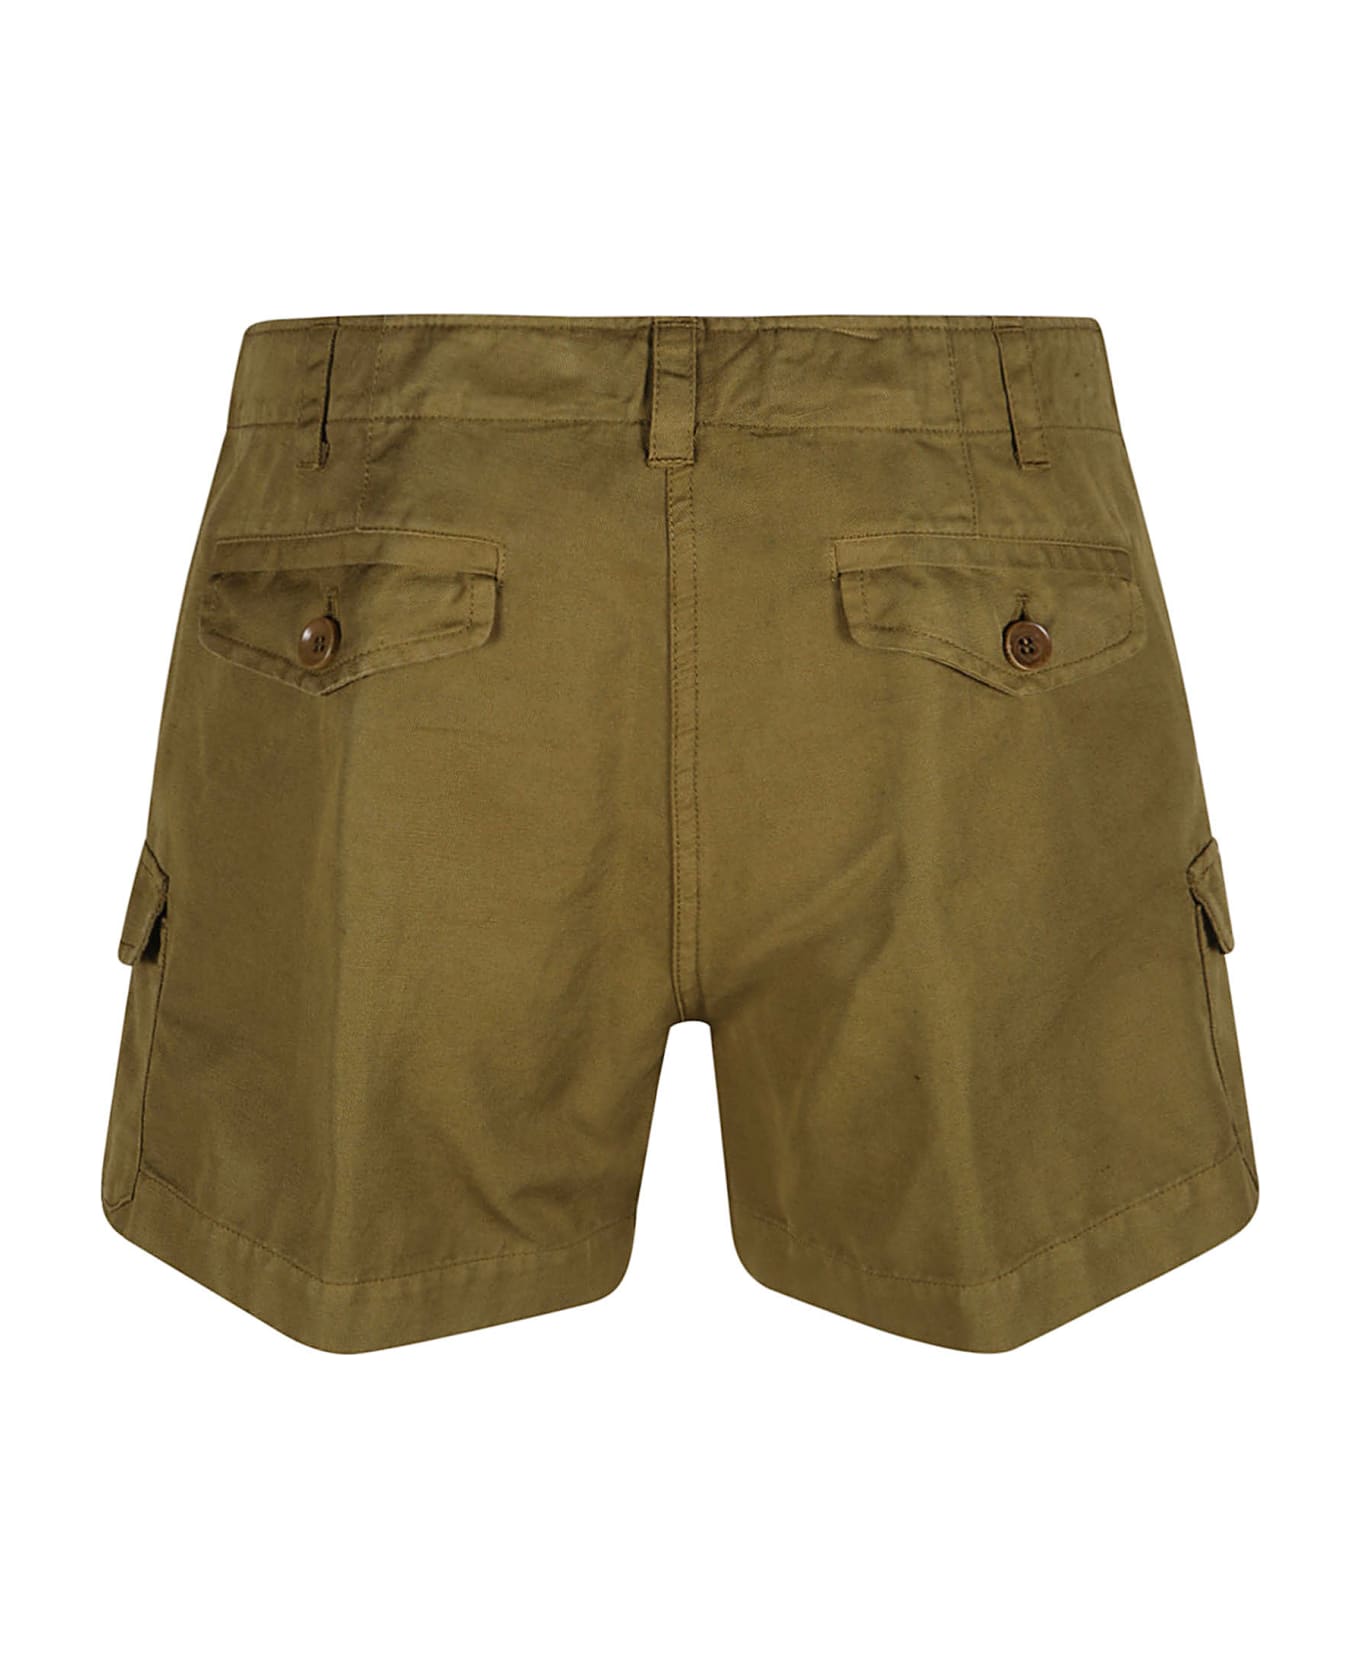 Aspesi Drawstringed Shorts - Green